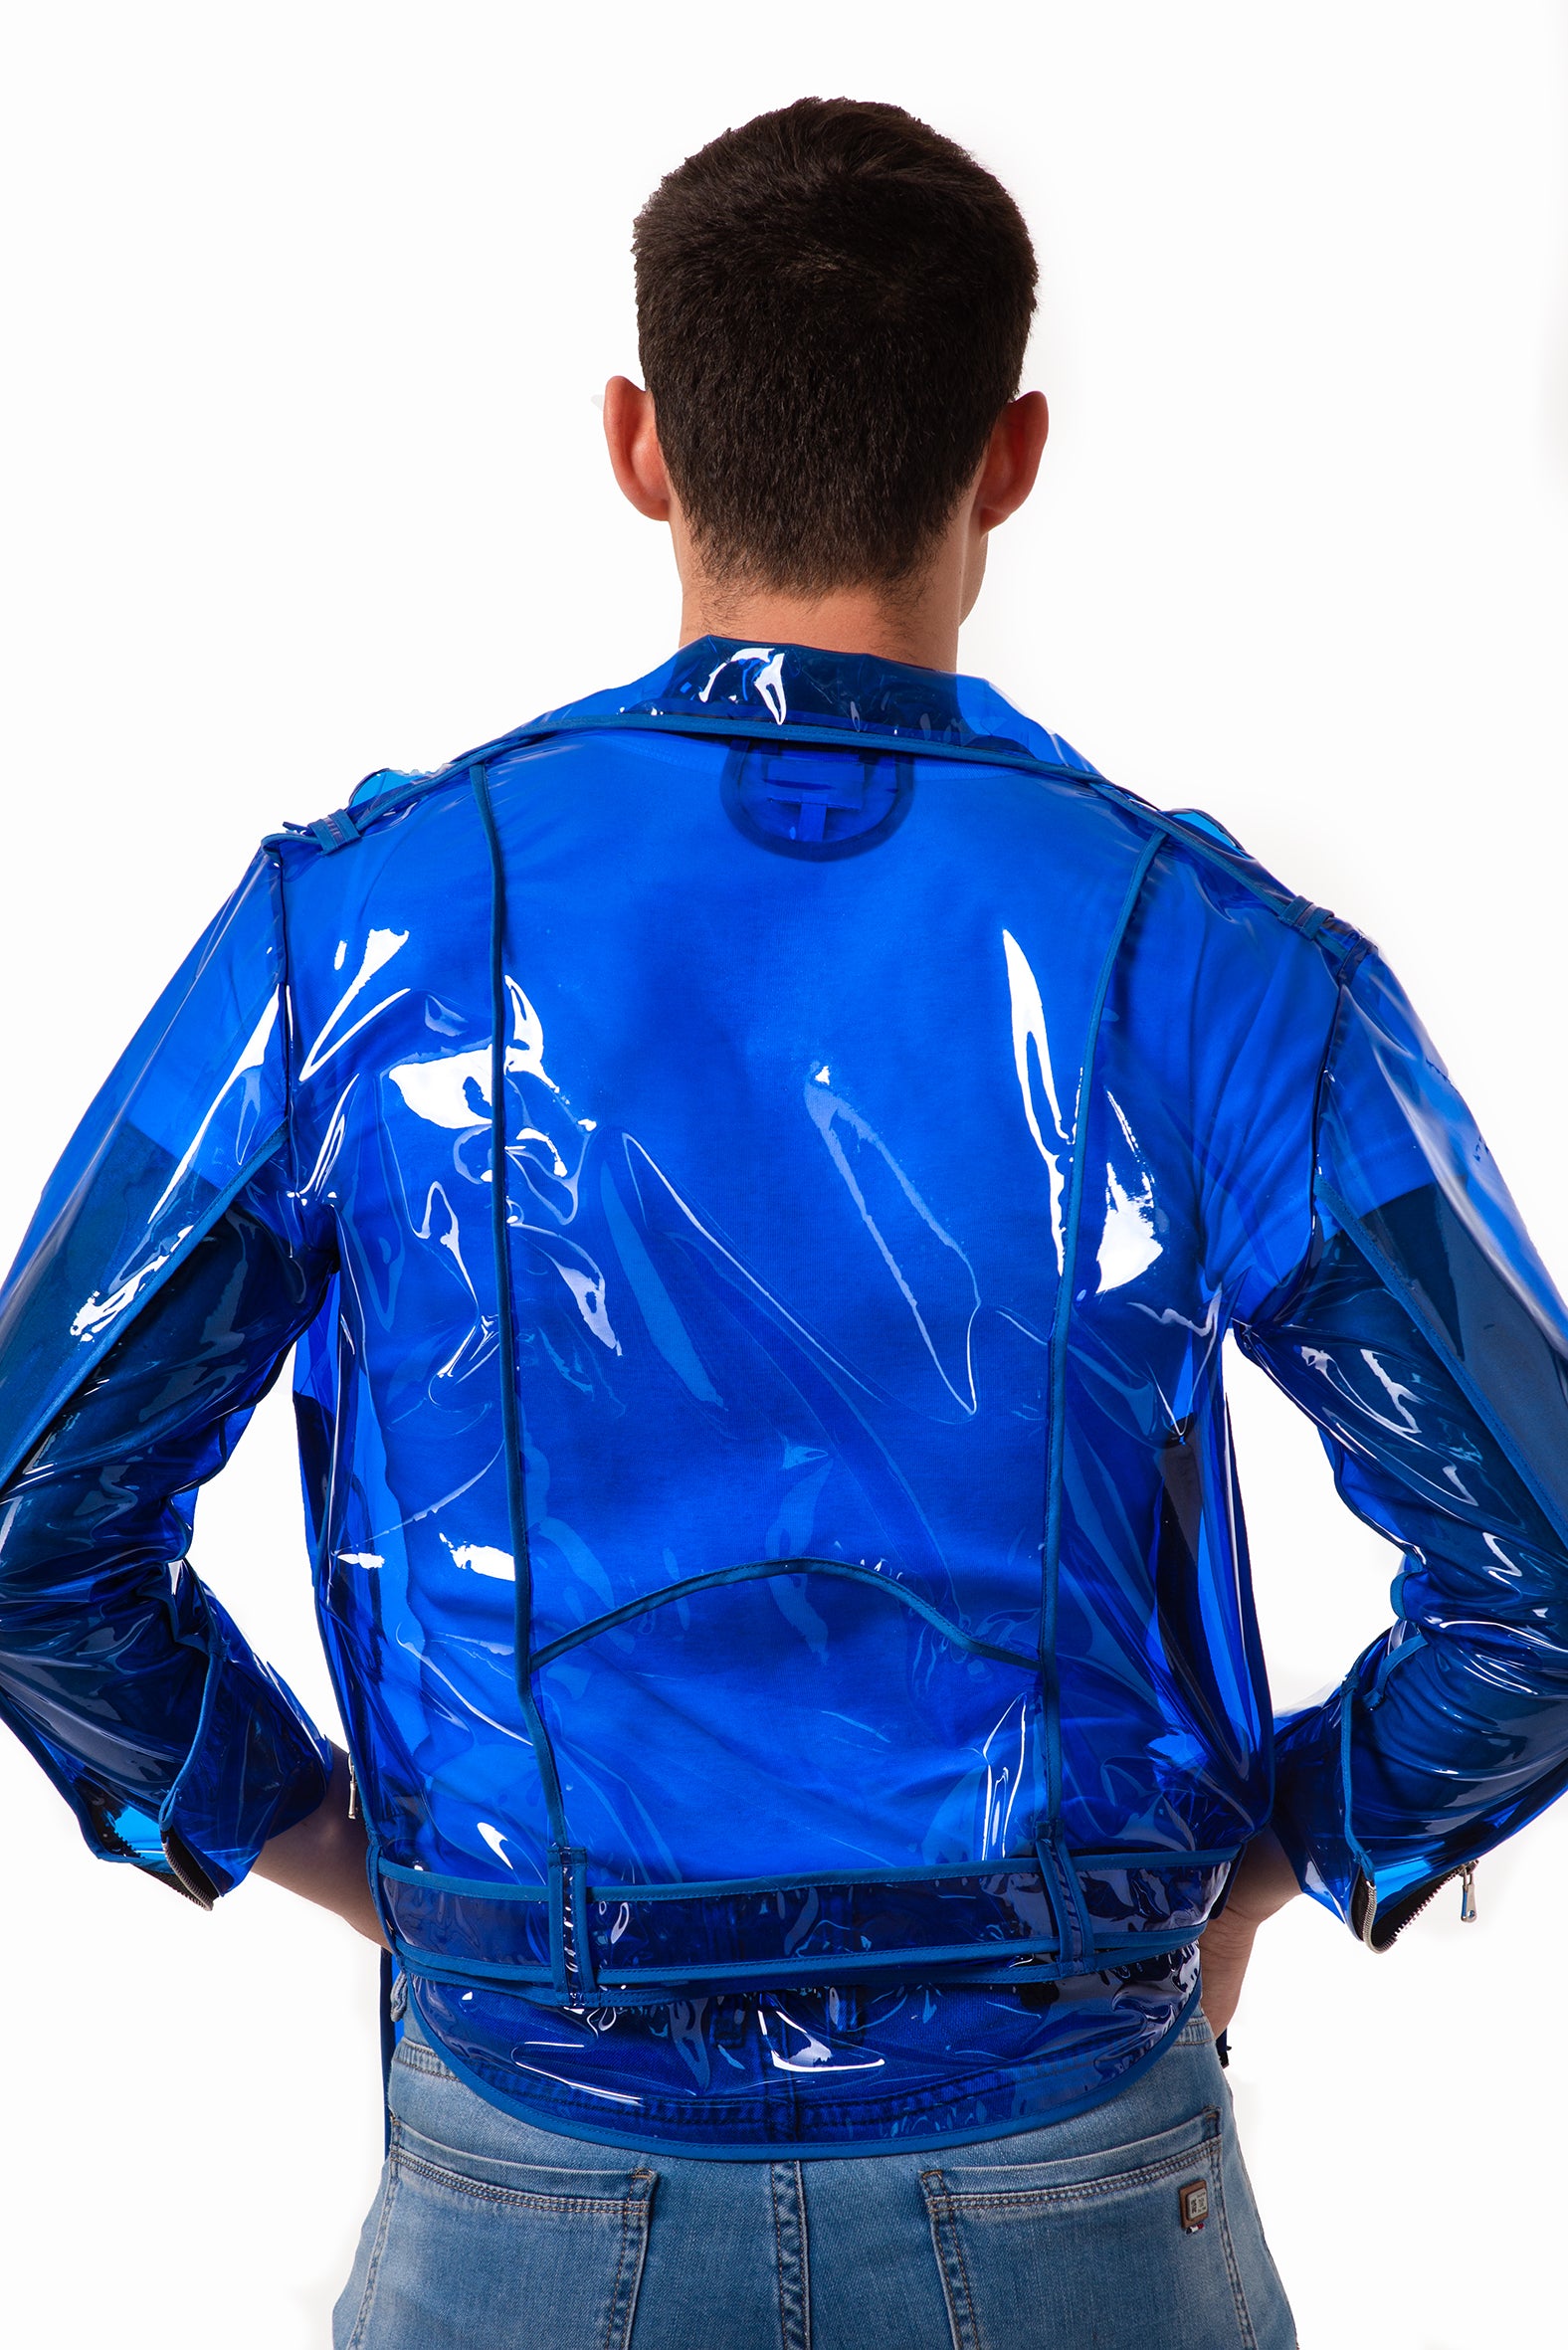 Vinyl Men's Biker Jacket. Motorcycle transparent jacket.